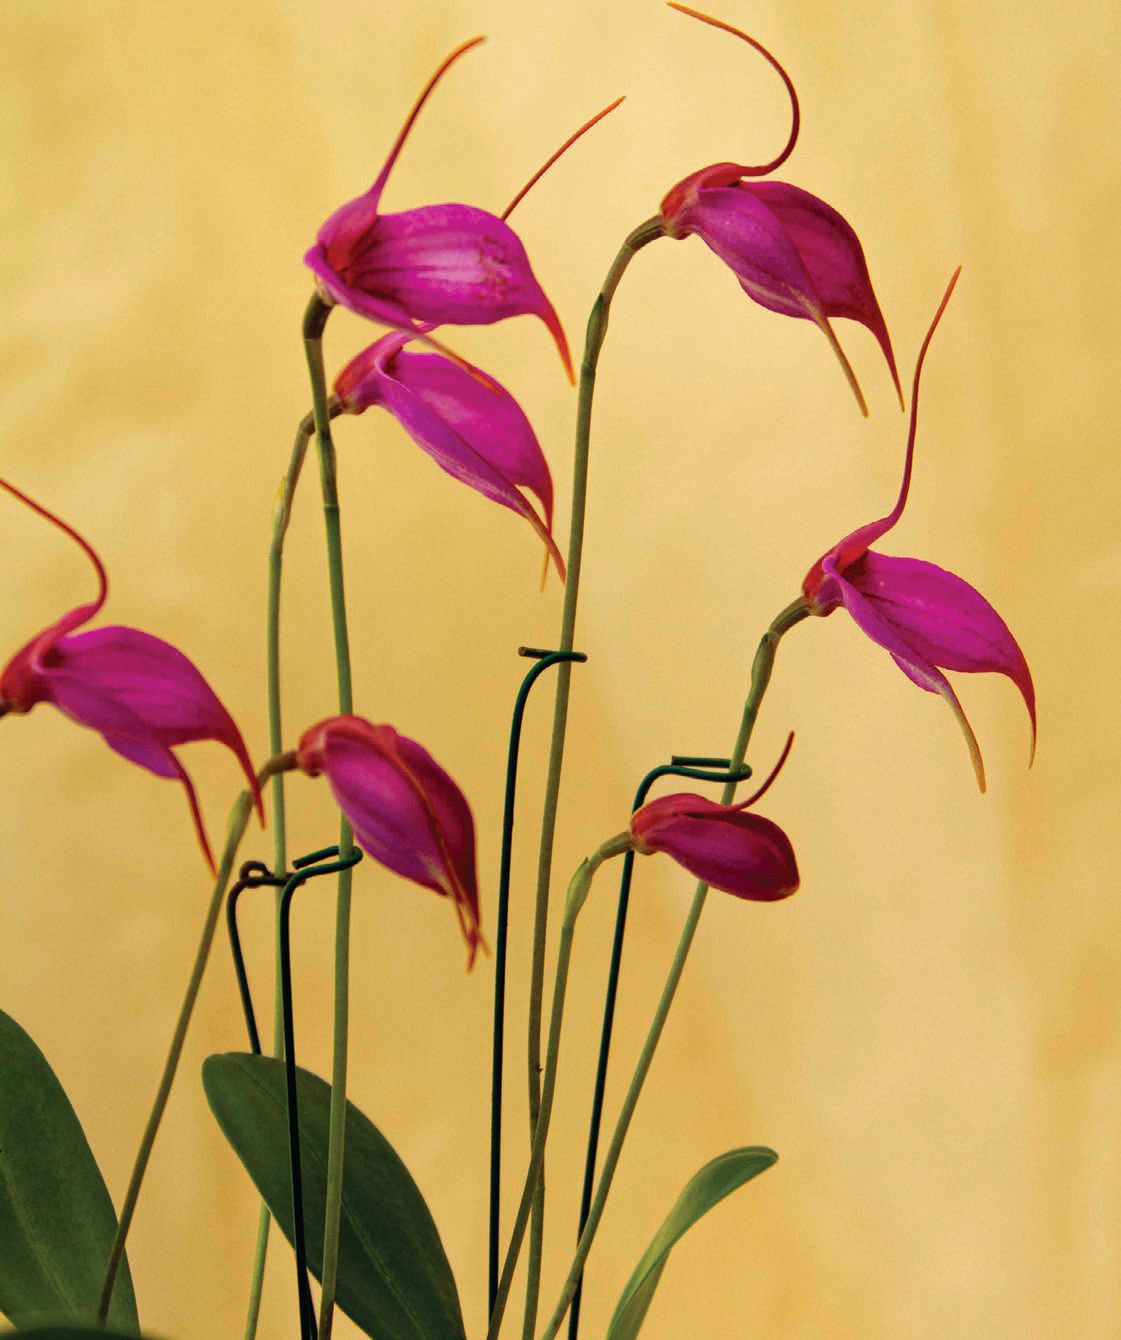 Visit San Diego Botanic Garden through June 12 to view its World of Orchids exhibition. PHOTO BY RACHEL COBB